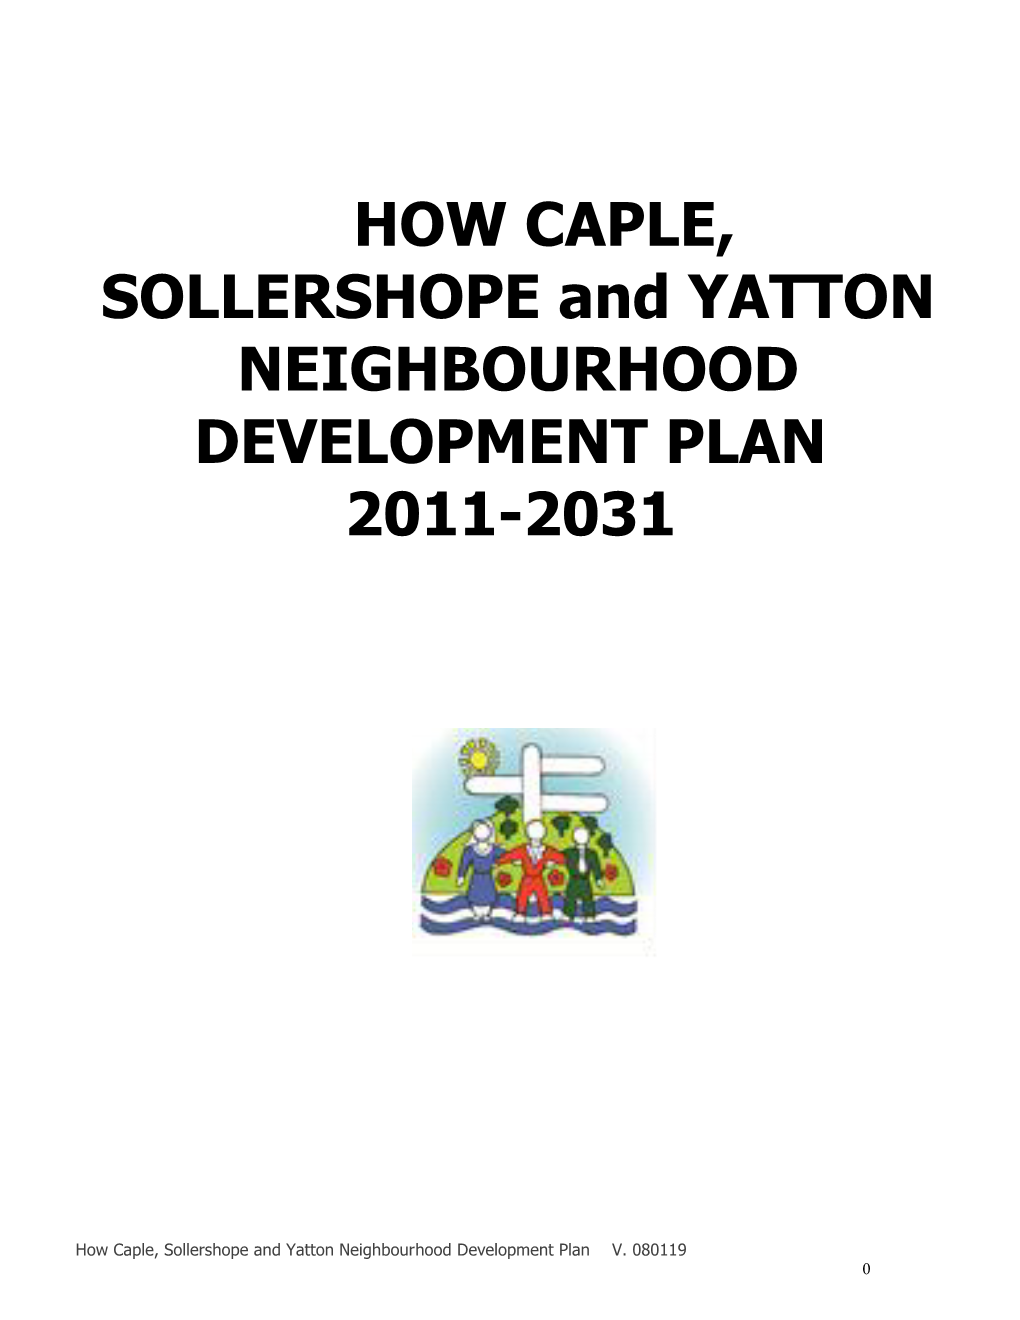 How Caple, Sollars Hope and Yatton Neighbourhood Development Plan